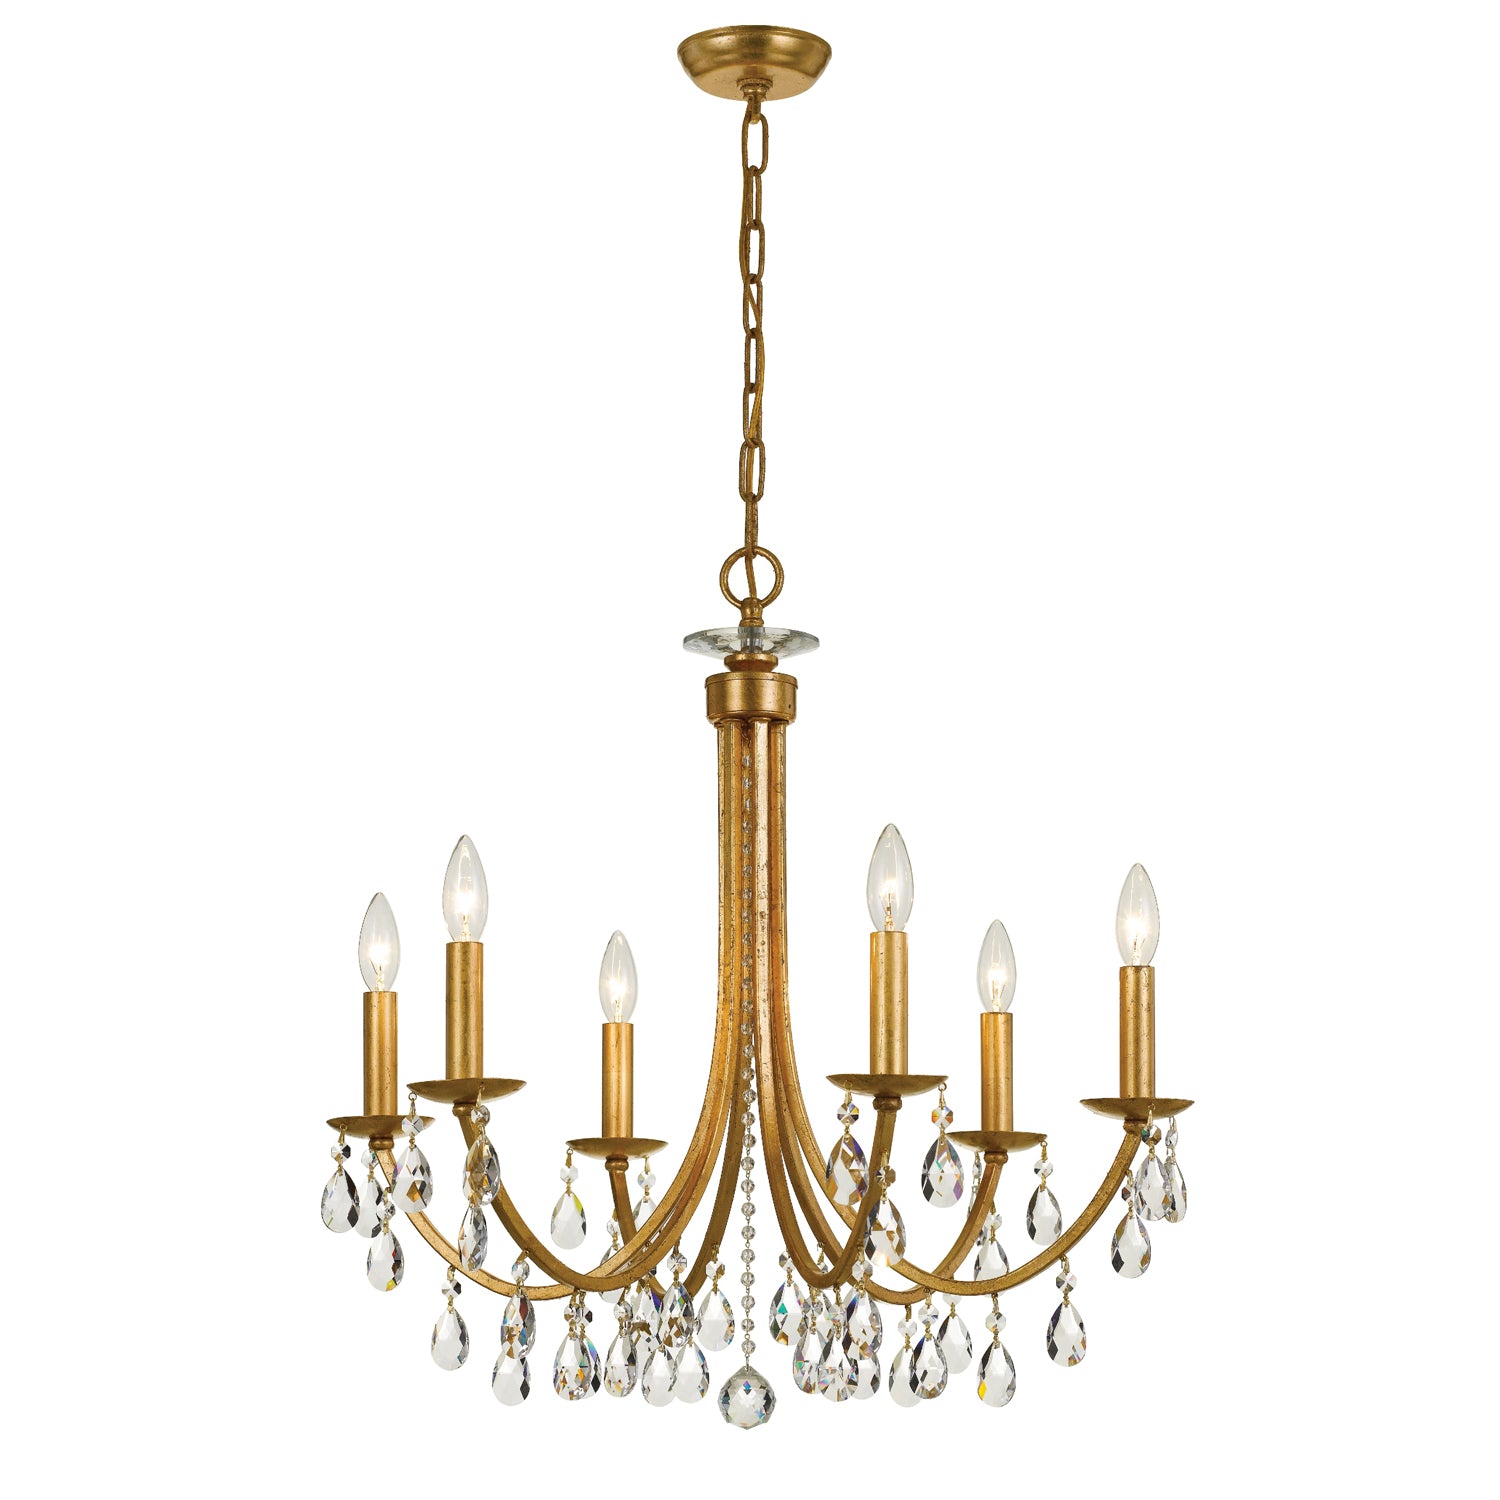 Cast brass six-arm, twelve-light chandelier - Old Lamps & Things, LLC